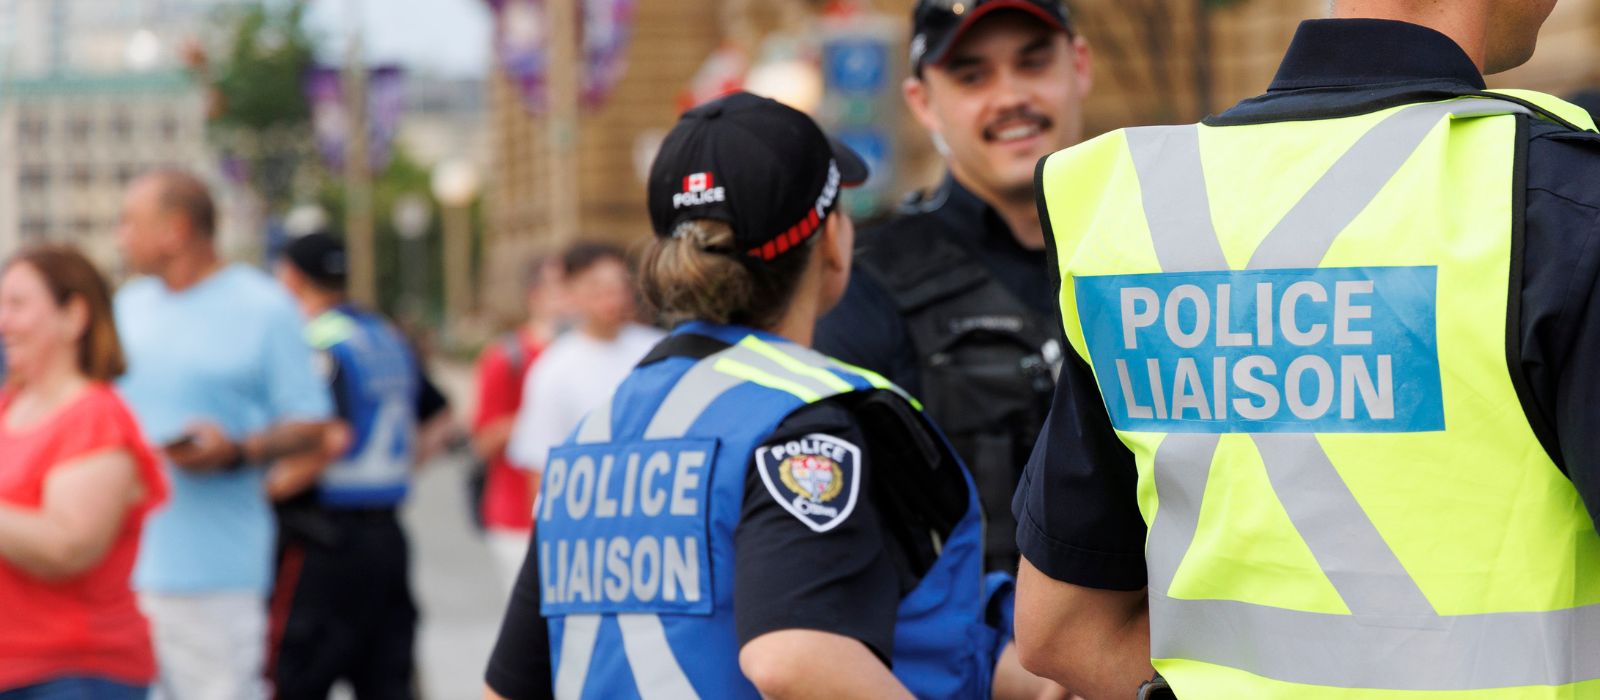 Ottawa Police Liaison Team officers